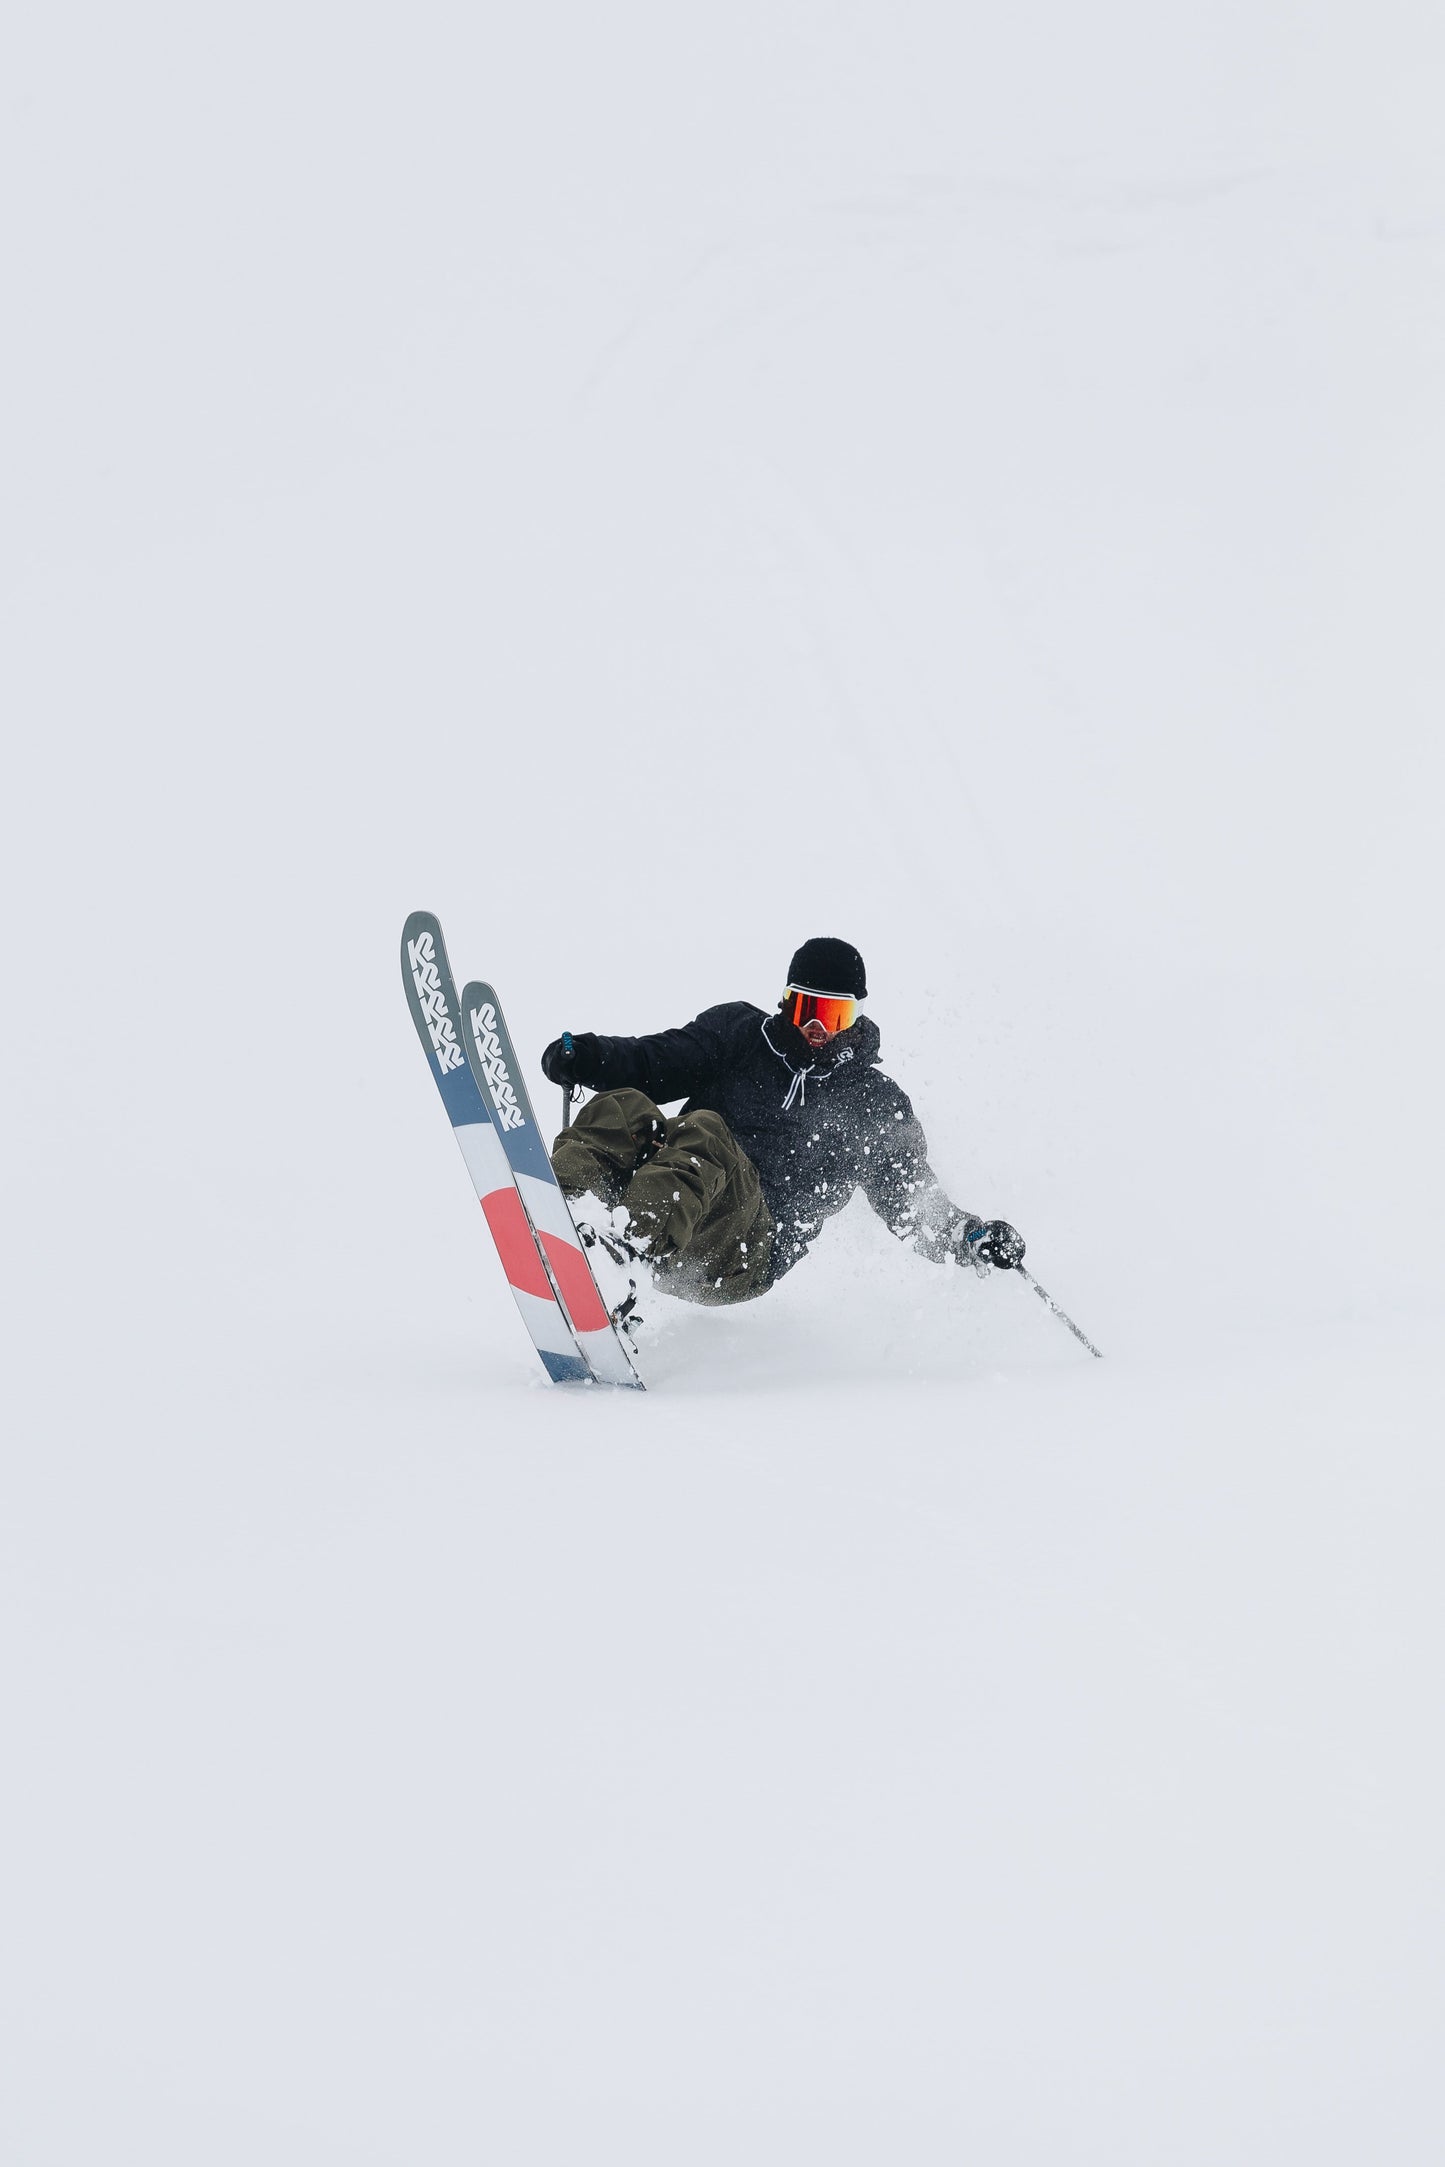 K2 Marksman Ski 2020